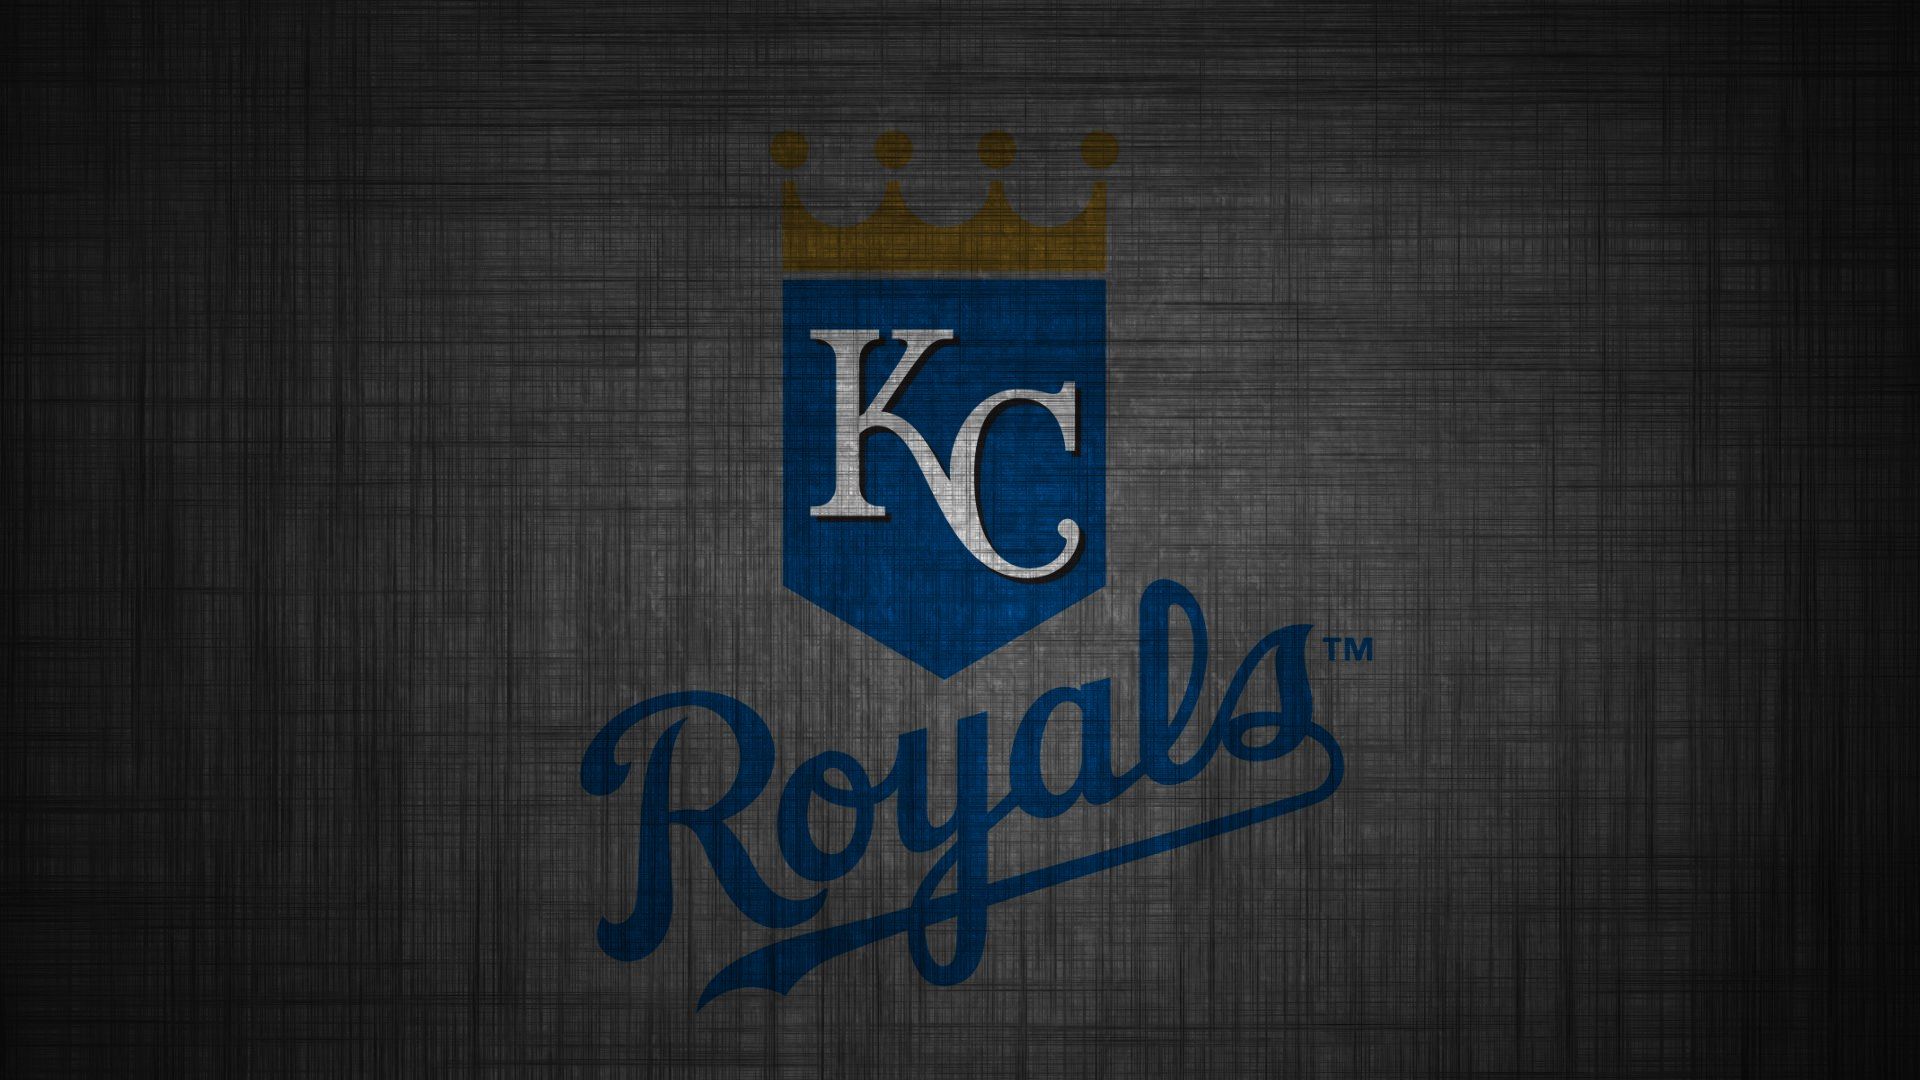 Kansas City Royals wallpaper by hawthorne85 on DeviantArt